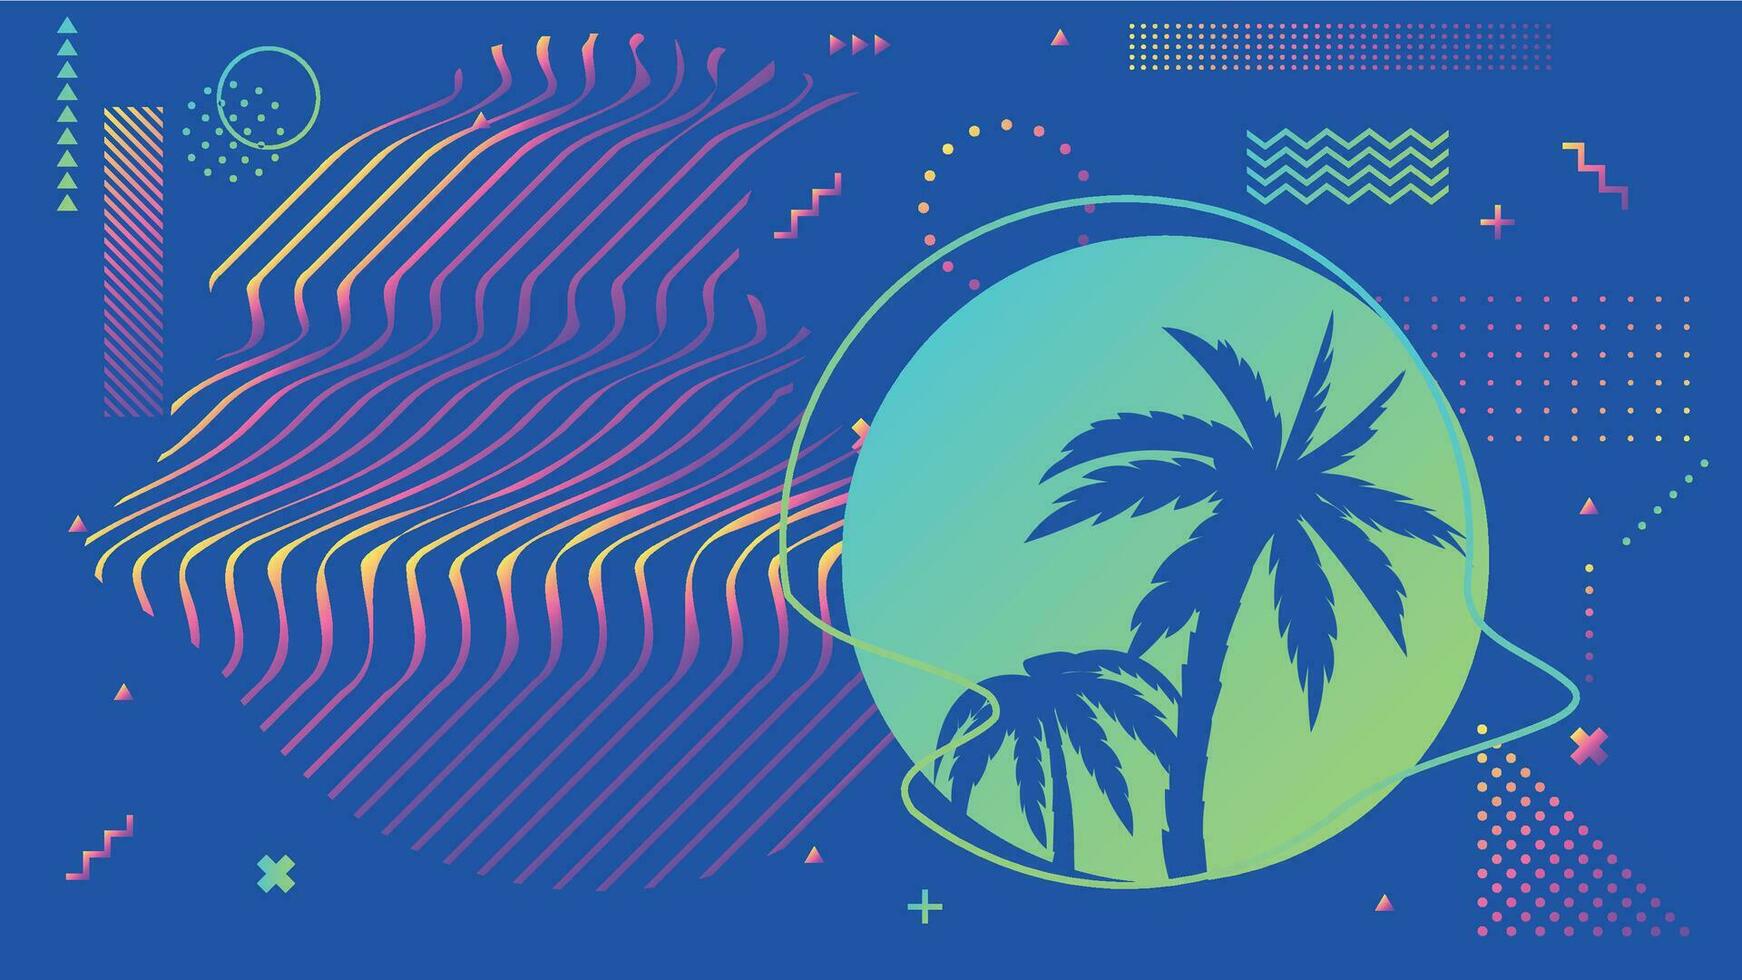 cyberpunk helder blauw achtergrond met palm bomen in cirkel kader met golvend lijnen of strepen. synthwave stijl vector